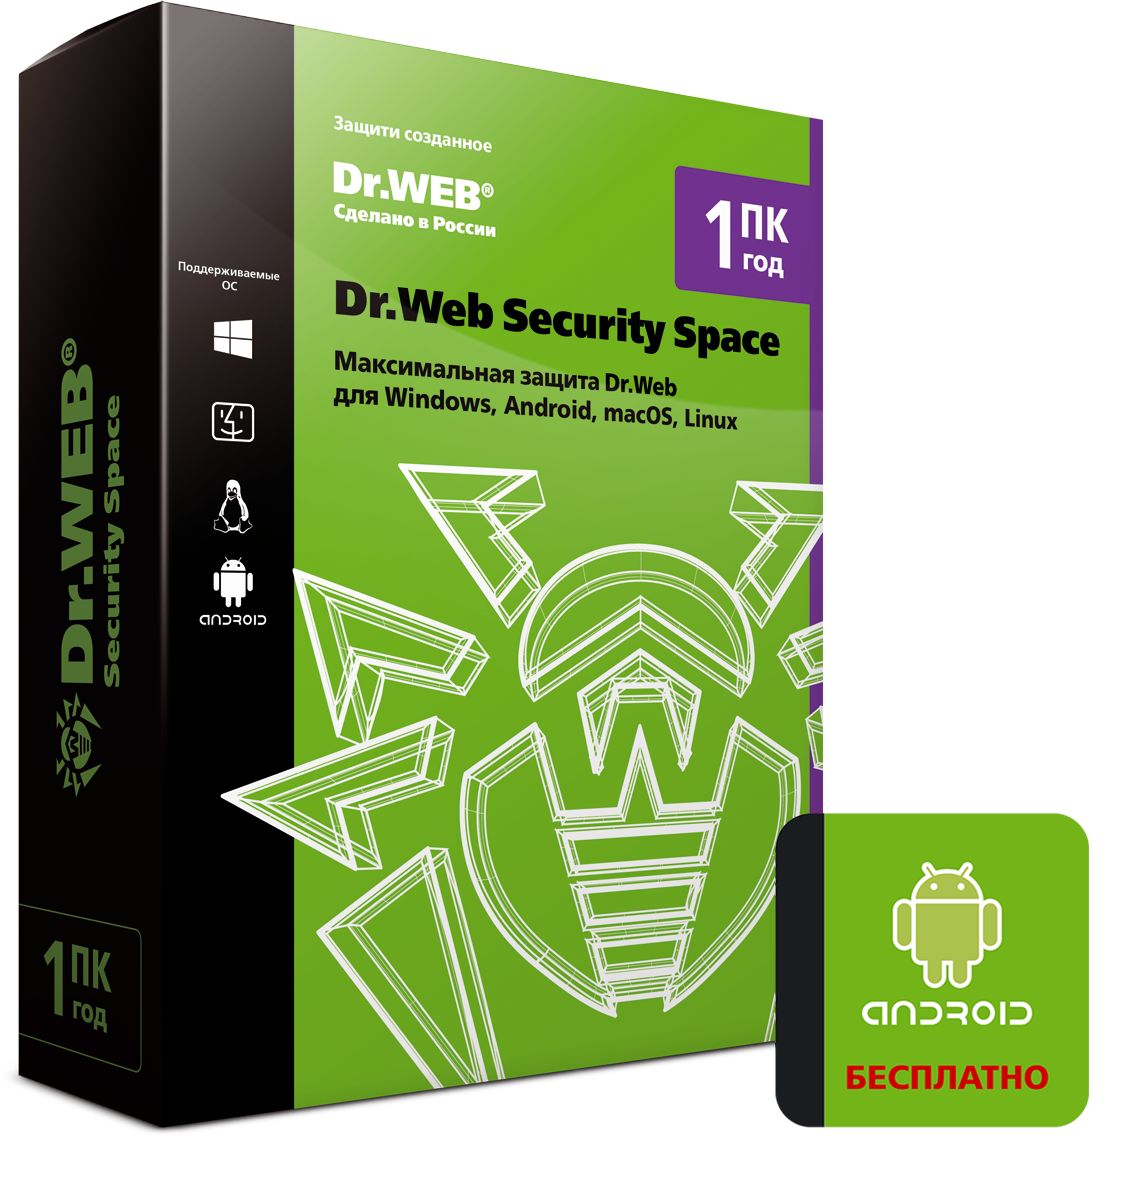 Антивирус Dr.Web Security Space на 1 год на 1 ПК [BHW-B-12M-1-A3] (Box) dr web security space продление 4 пк 4 моб устр 1 год [цифровая версия] цифровая версия